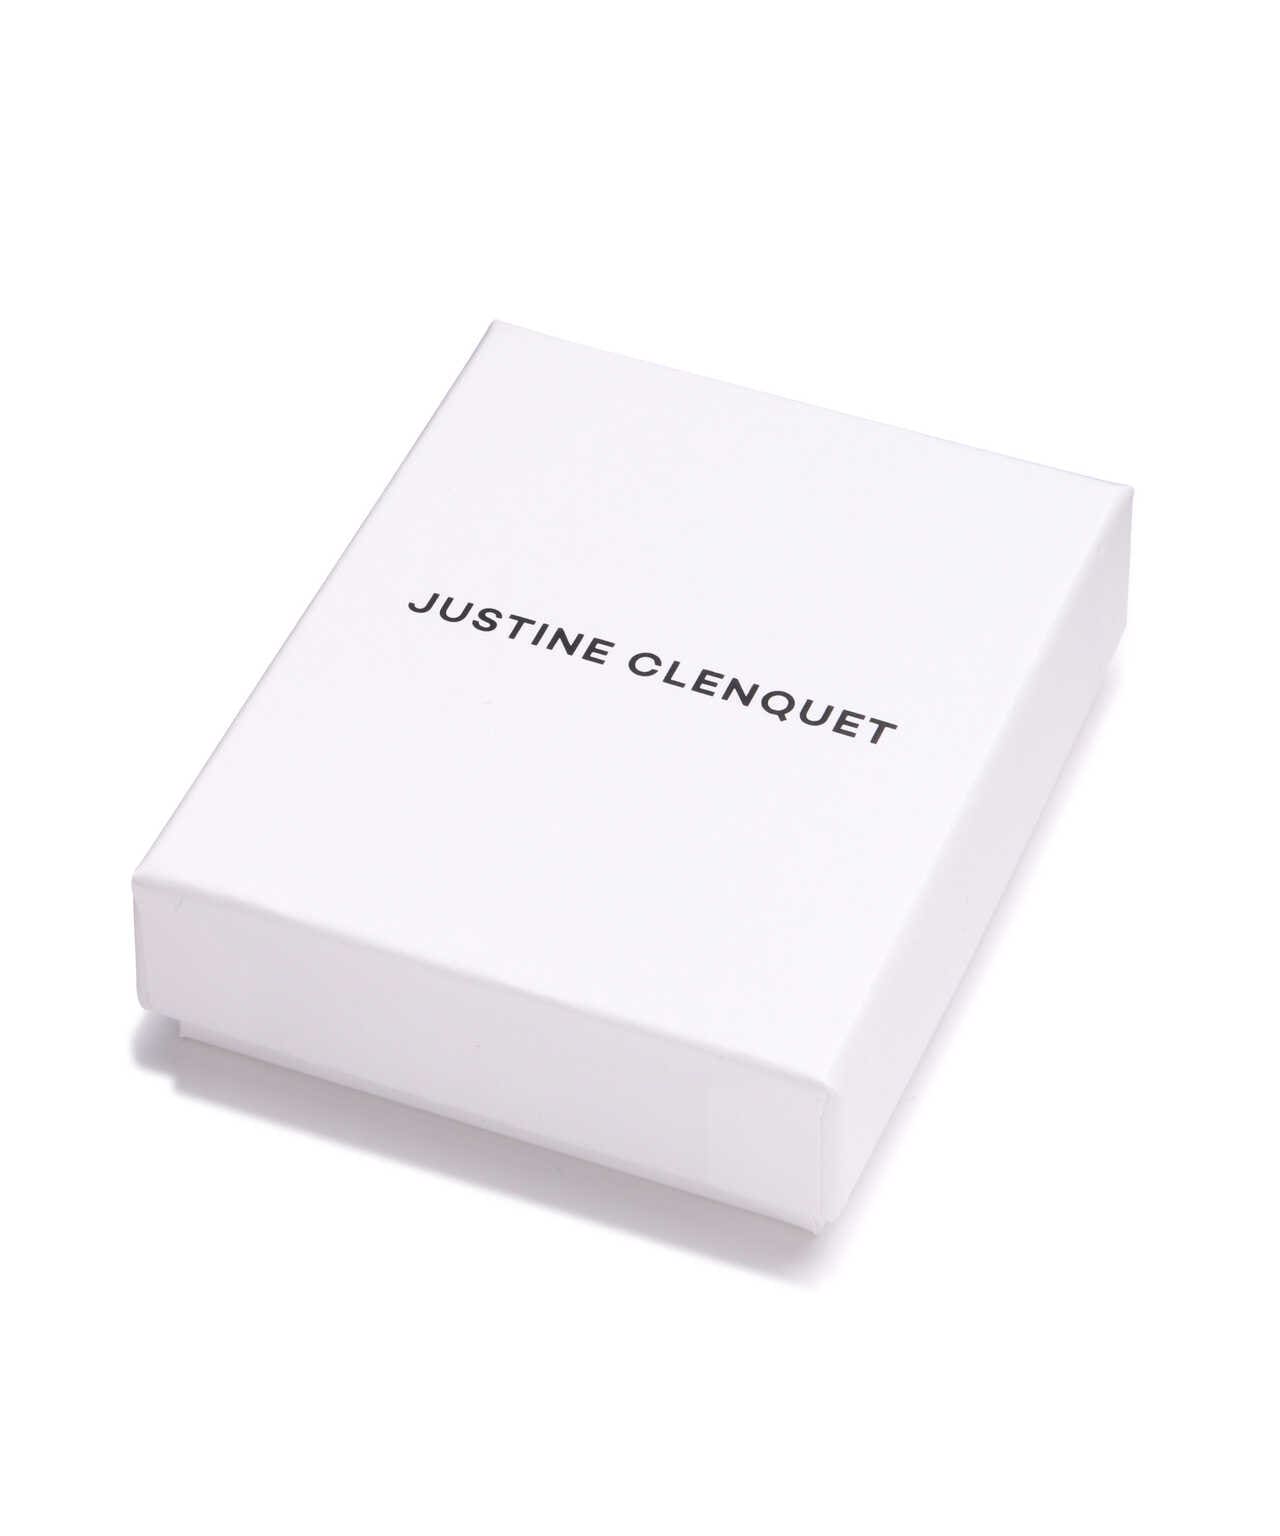 JUSTINE CLENQUET/ジュスティーヌ・クランケ/Charly bracelet | ROYAL